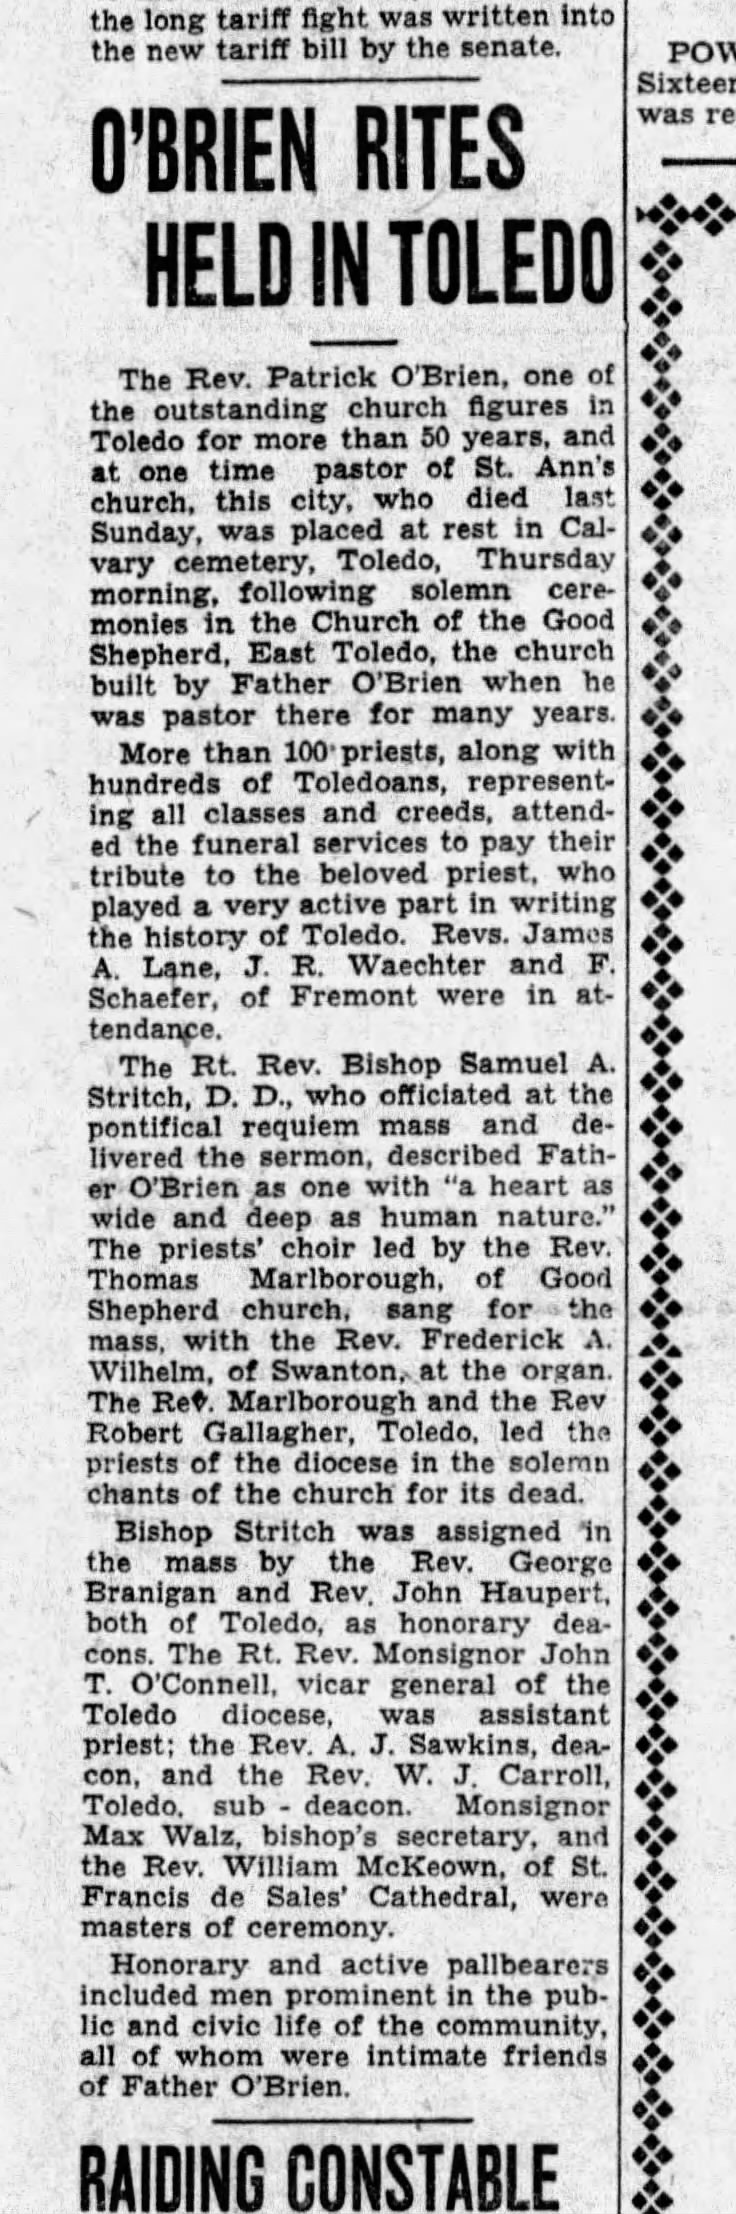 O'Brien Rites Held
Rev Patrick O'Brien 1930